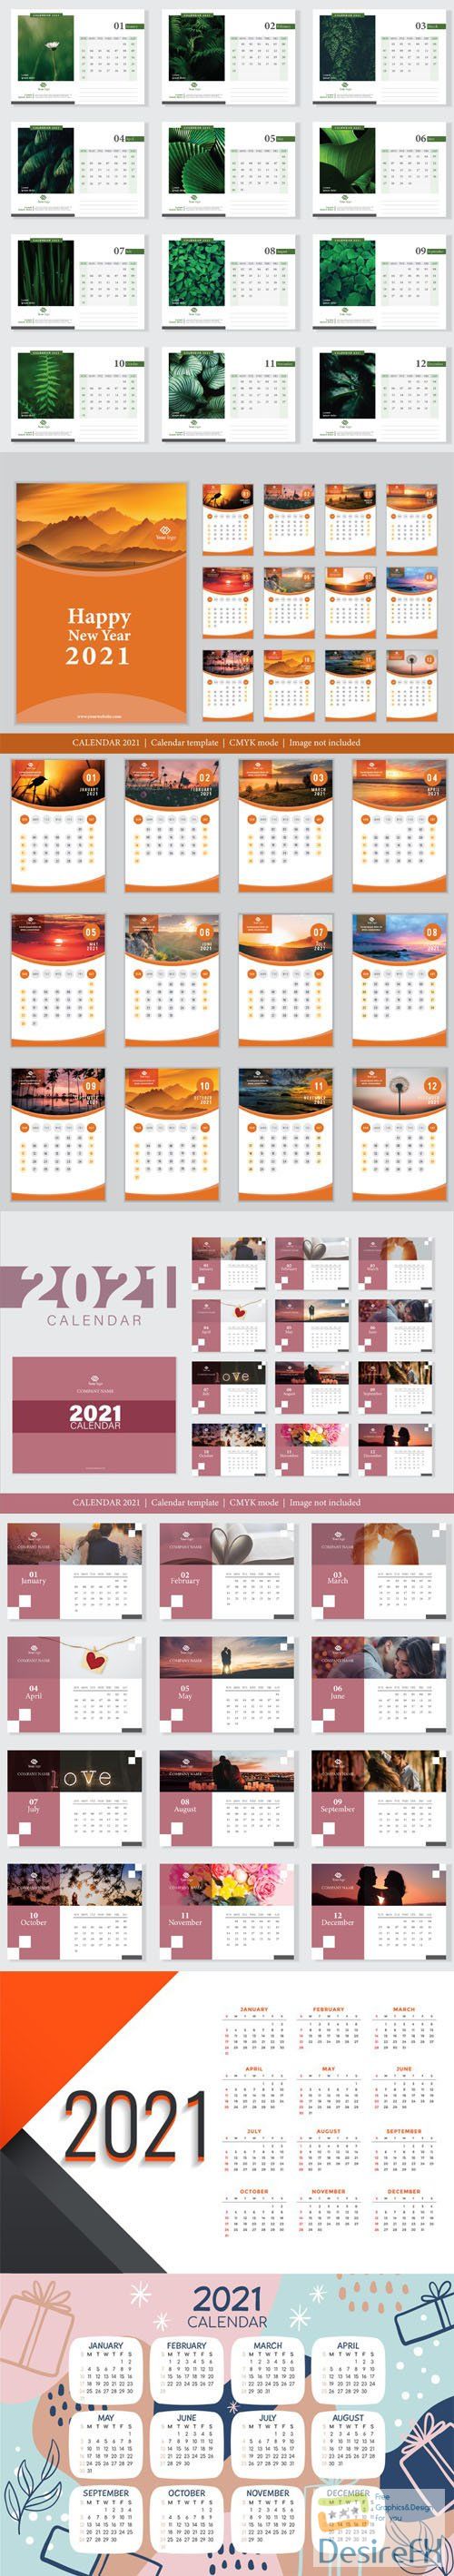 8 Modern Professional 2021 Calendar Design Vector Templates